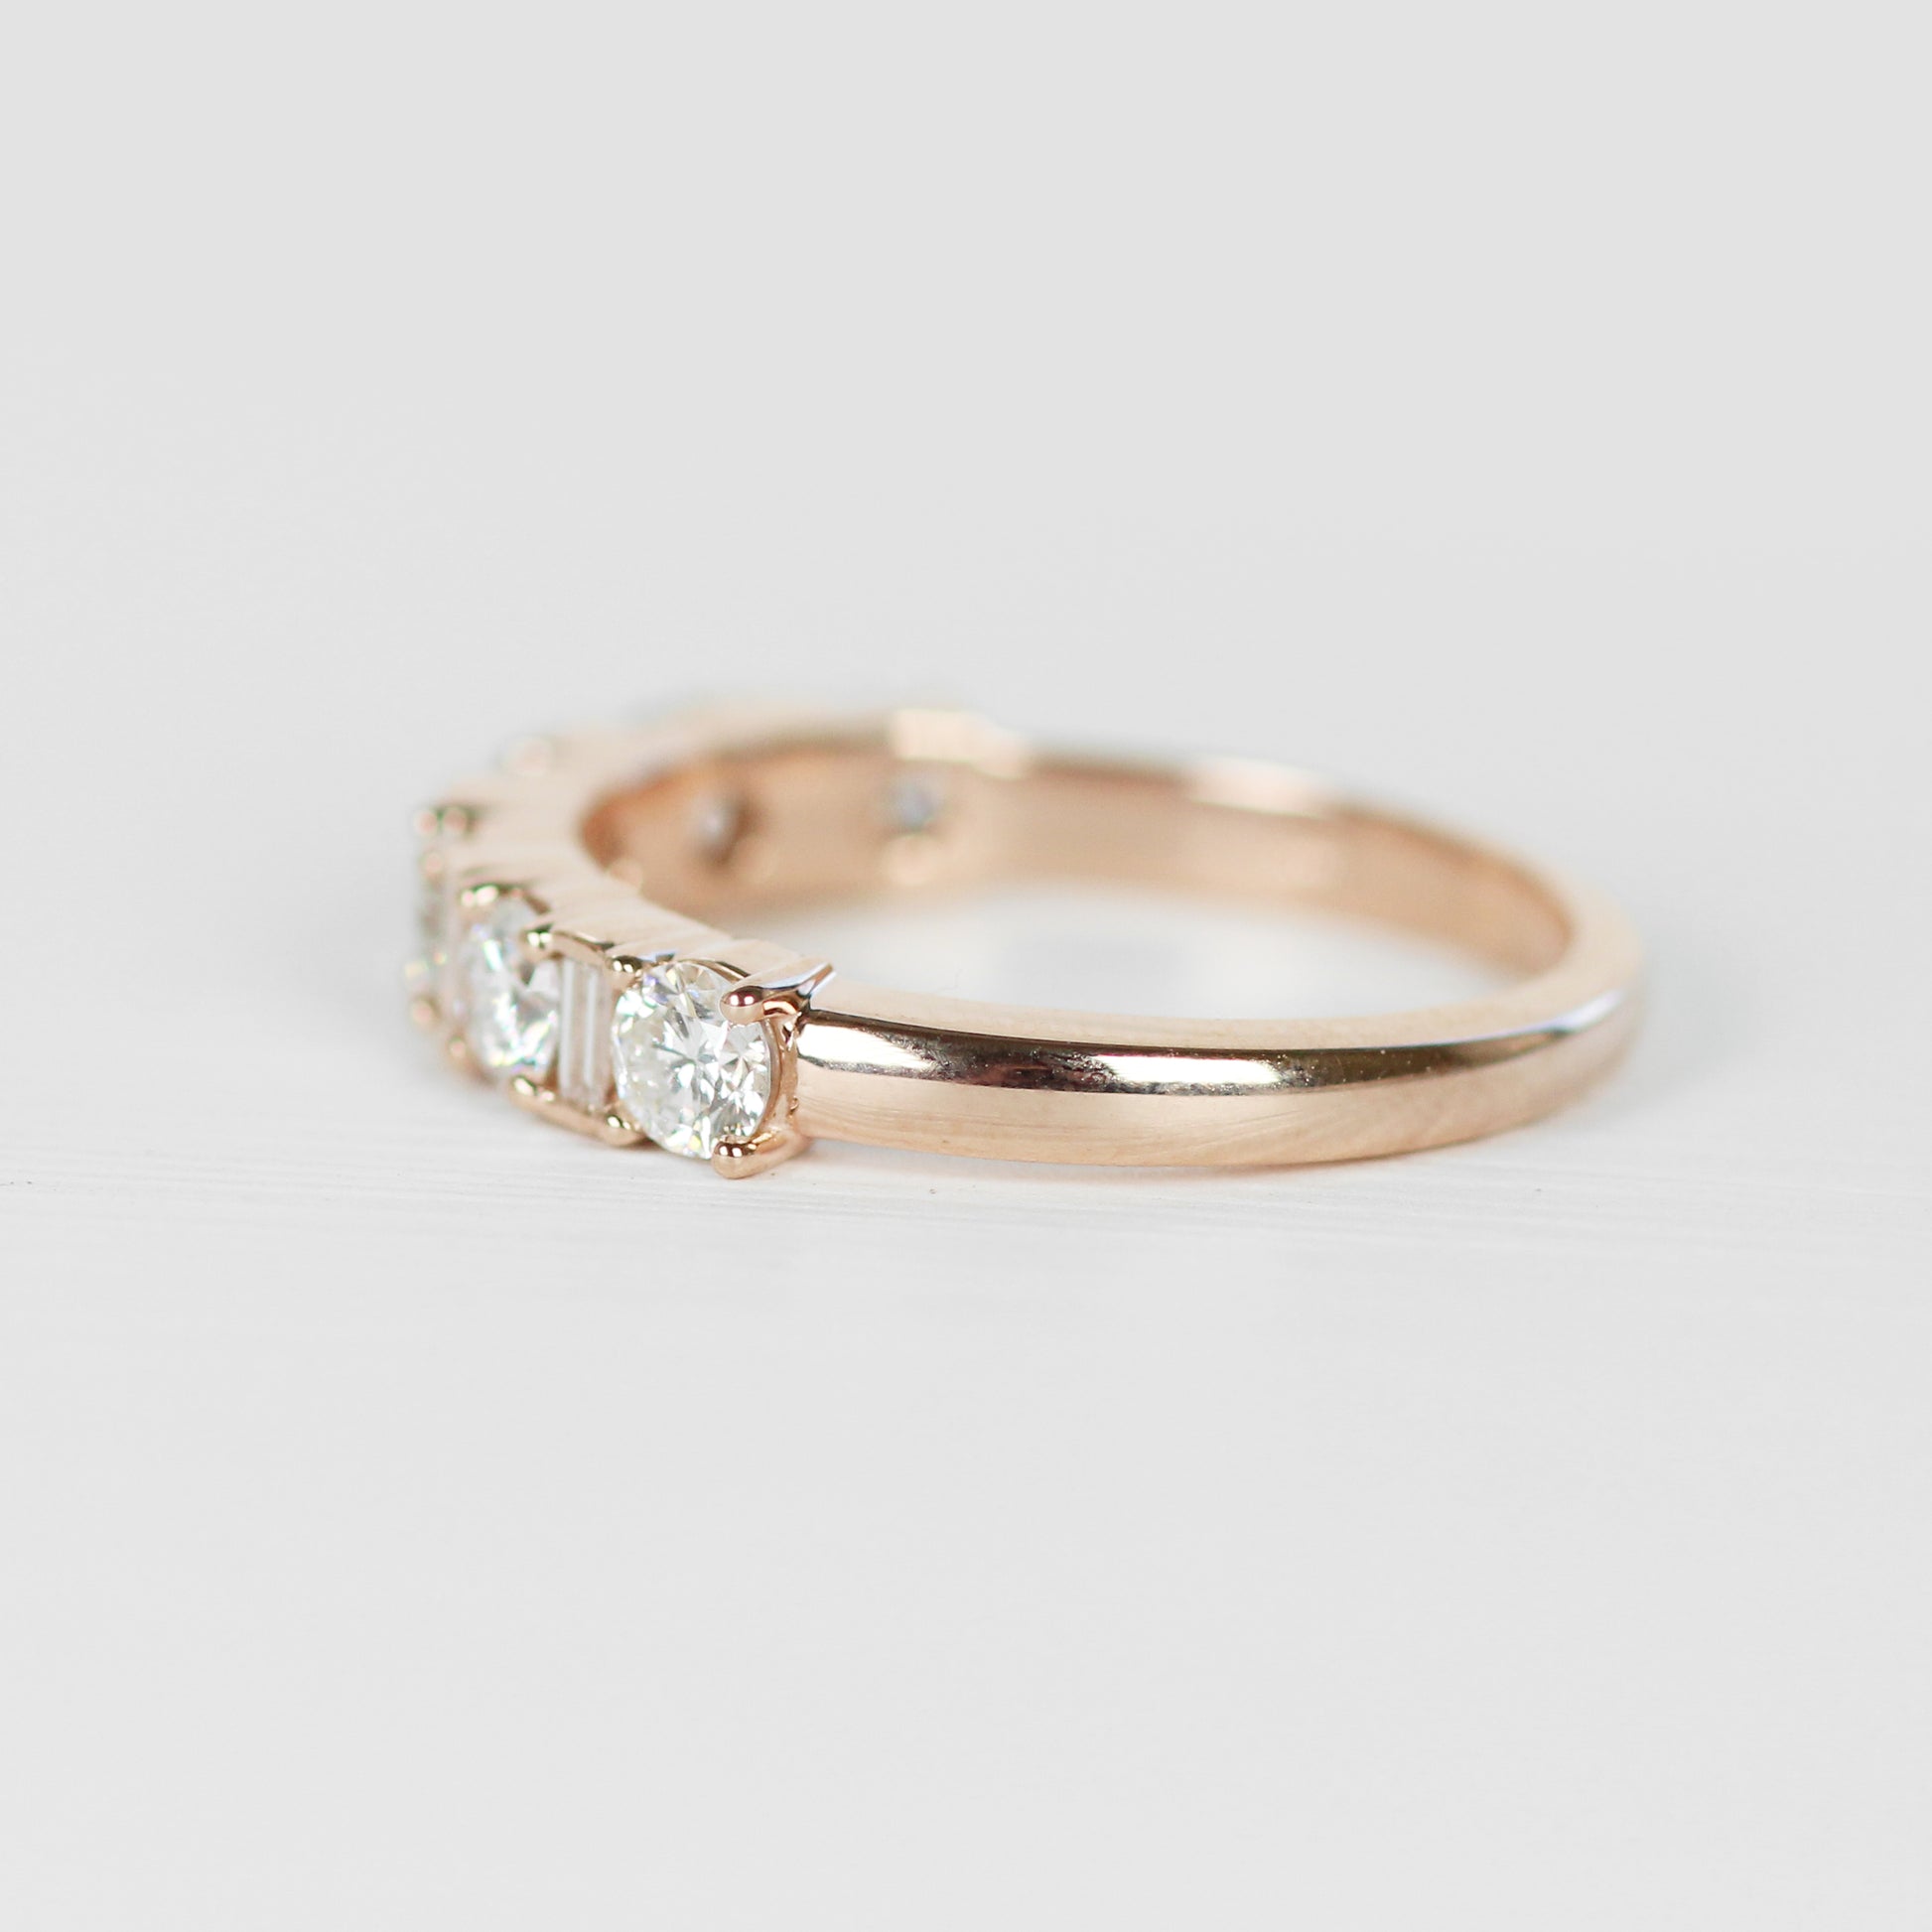 Demetria Diamond Engagement Ring Band - Celestial + white diamonds - Midwinter Co. Alternative Bridal Rings and Modern Fine Jewelry